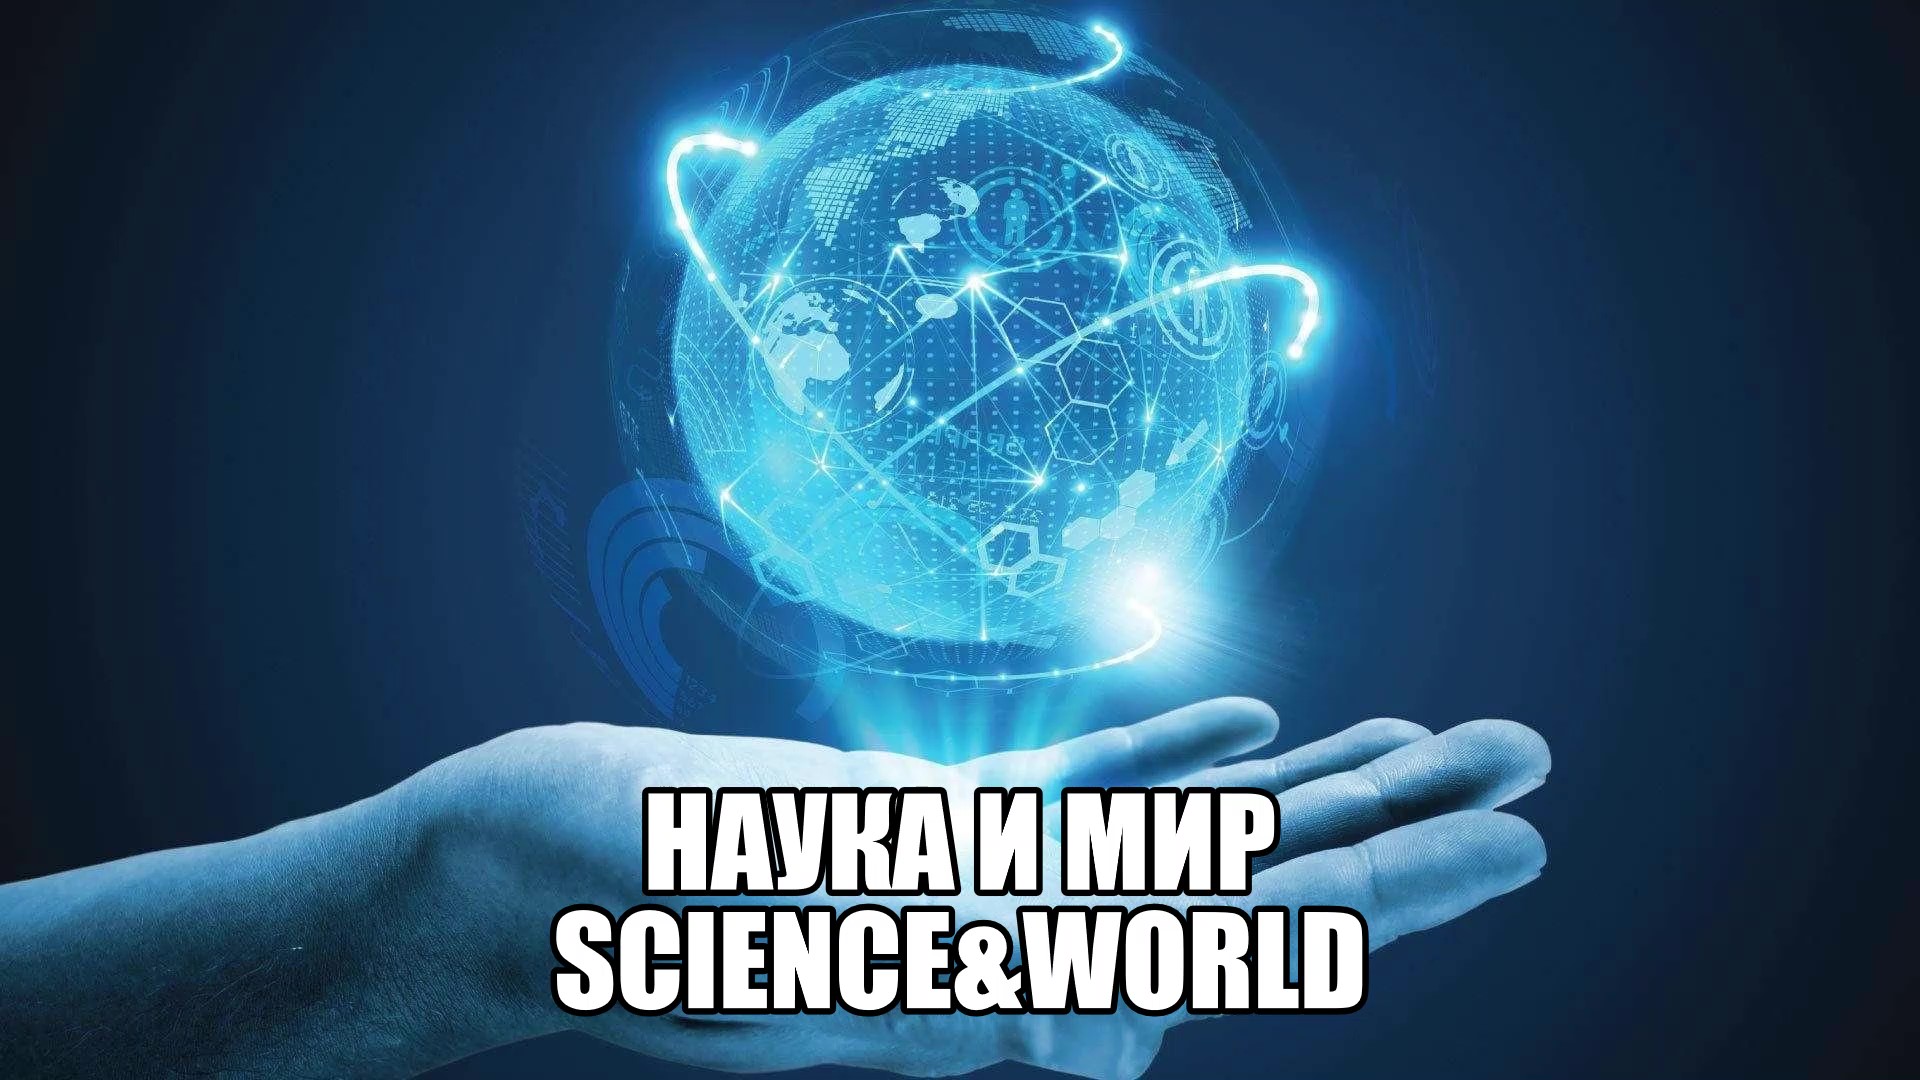                         Science & World
            